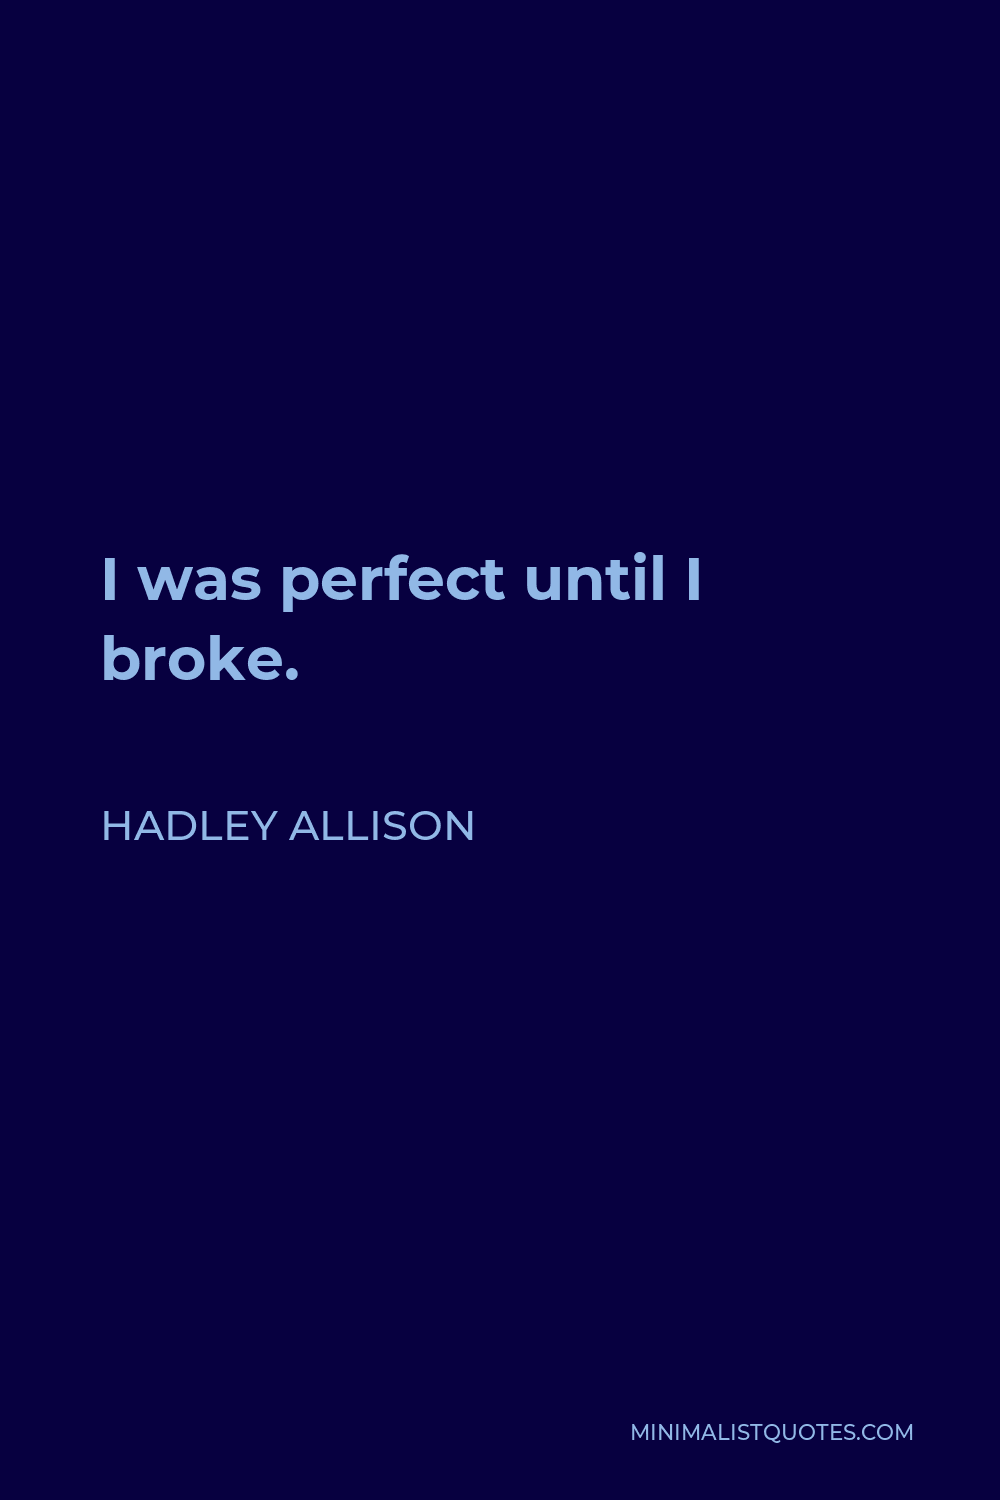 Hadley Allison Quote - I was perfect until I broke.